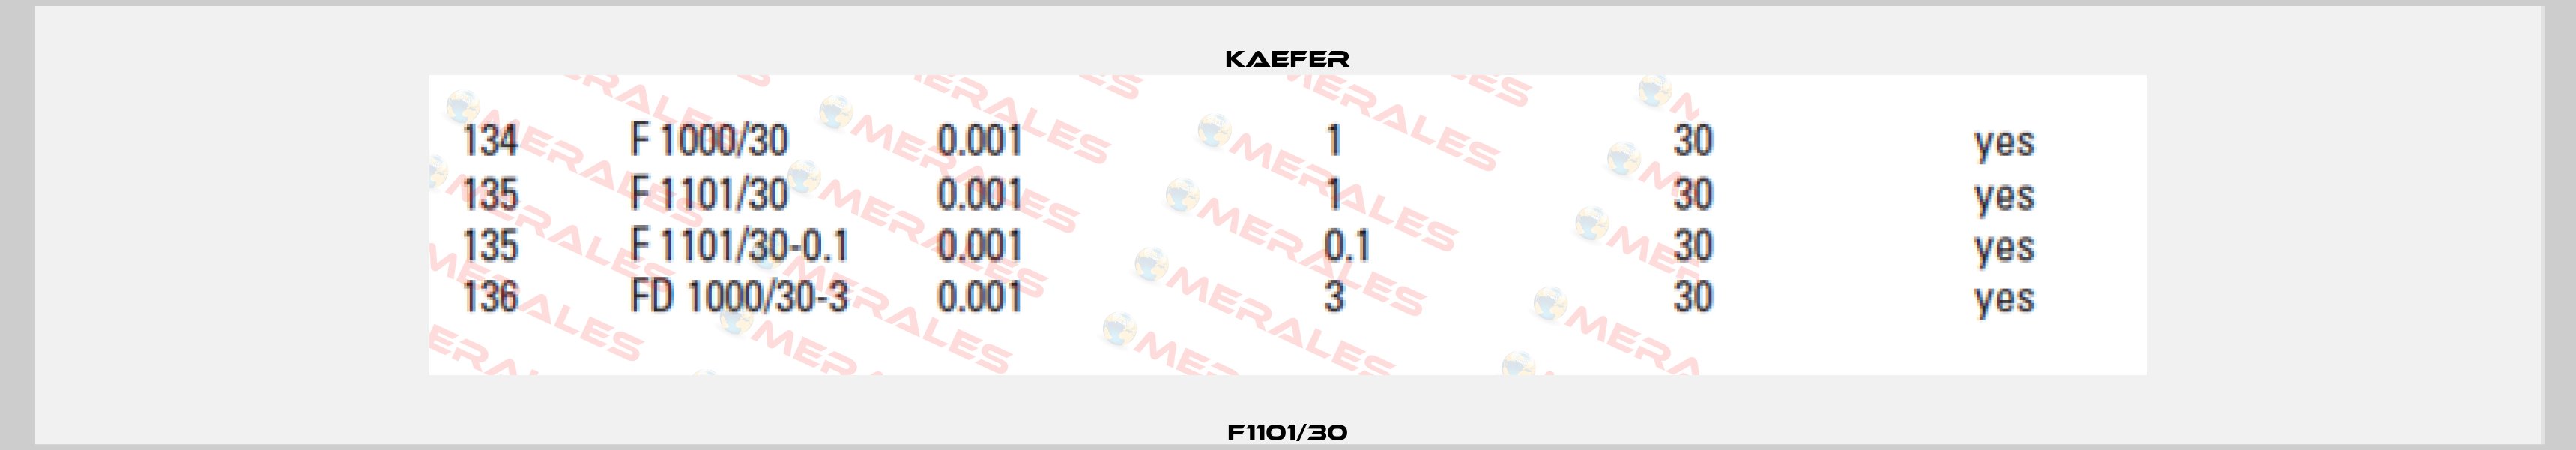 F1101/30 Kaefer